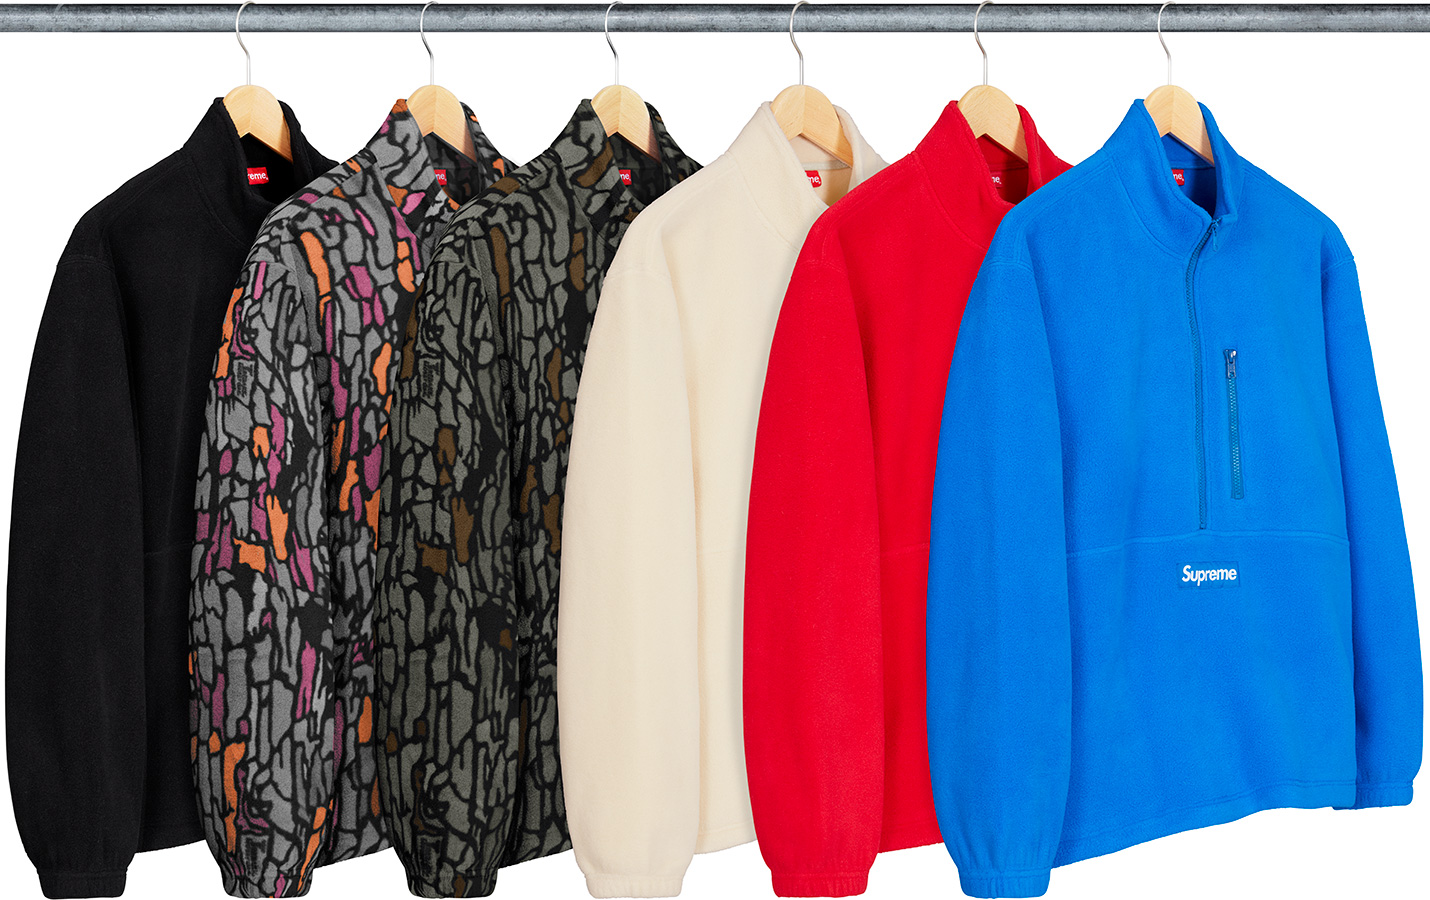 Polartec® Half Zip Pullover - Supreme Community